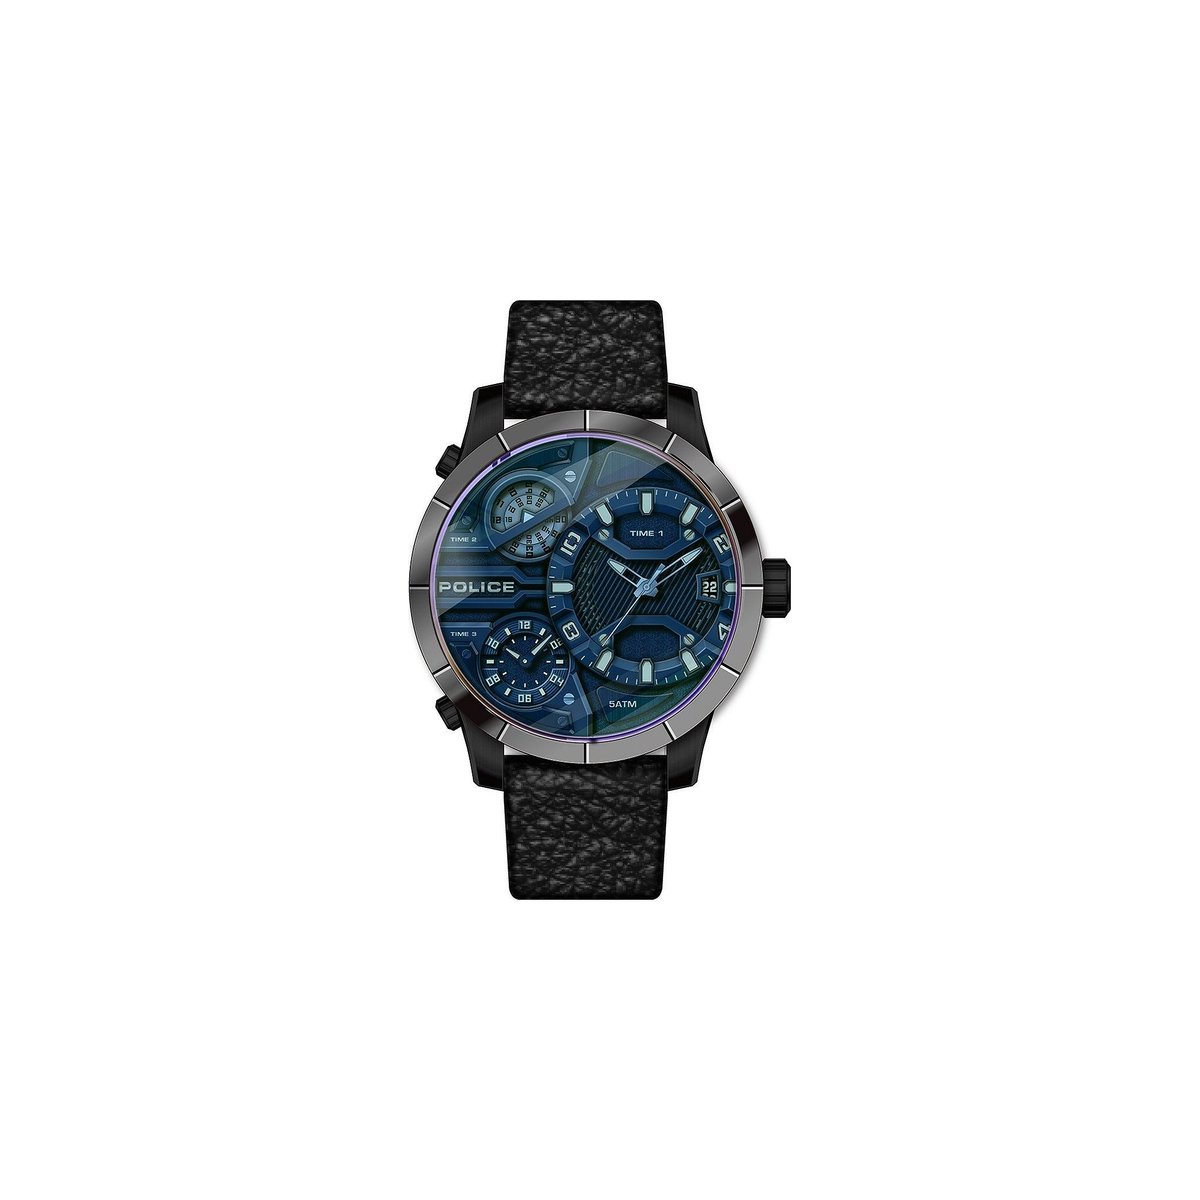 Police Heren horloges quartz analoog One Size Zwart 32017662